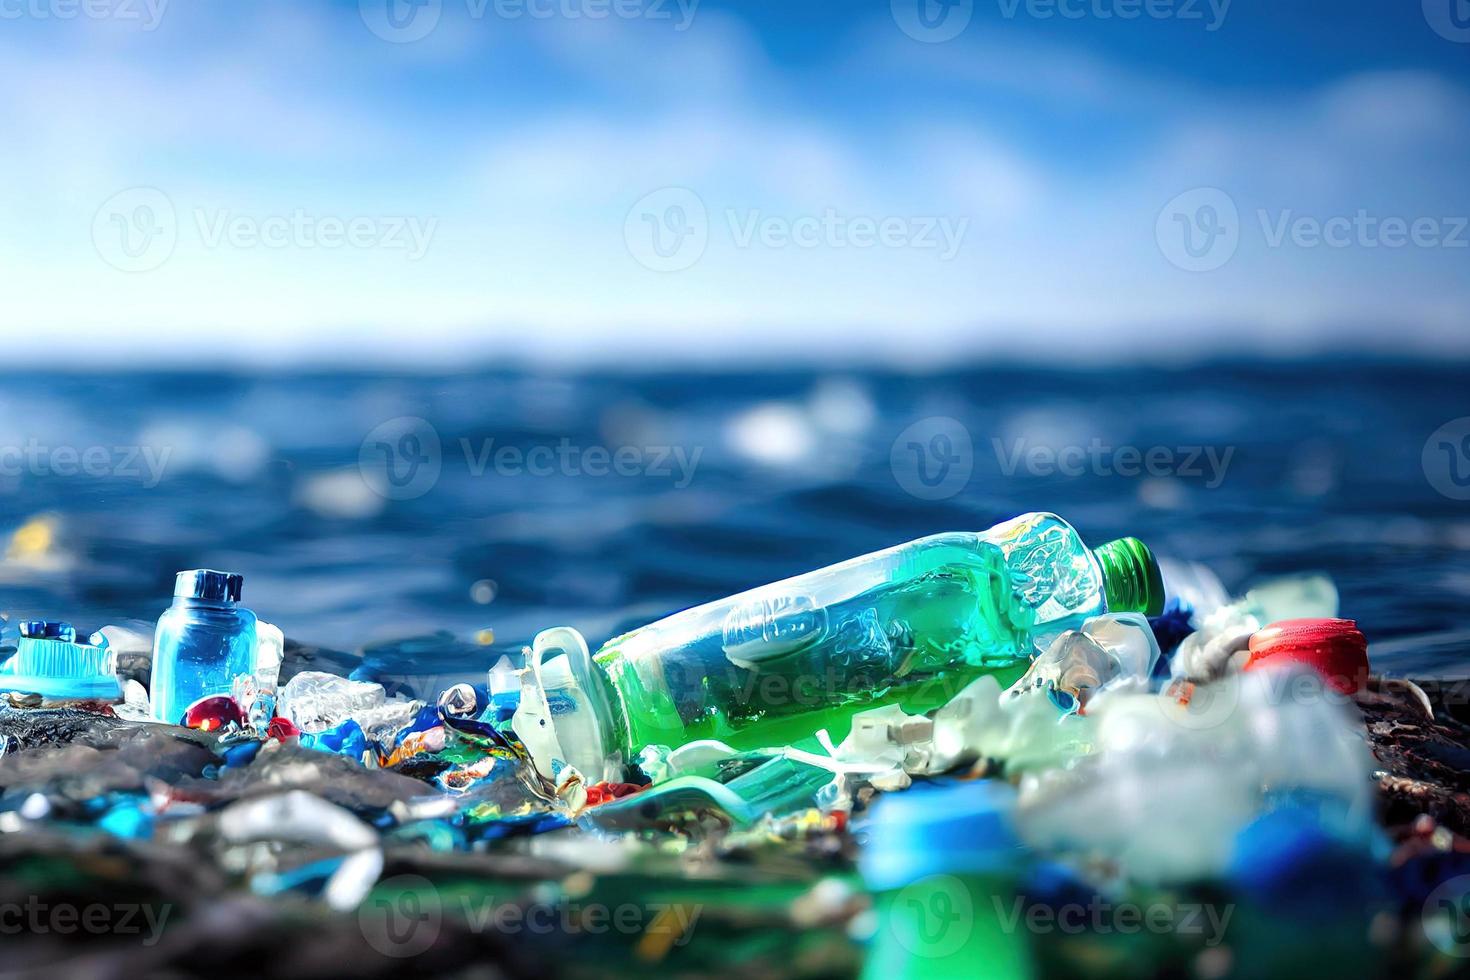 garrafas plásticas problemáticas e microplásticos flutuando no oceano. foto